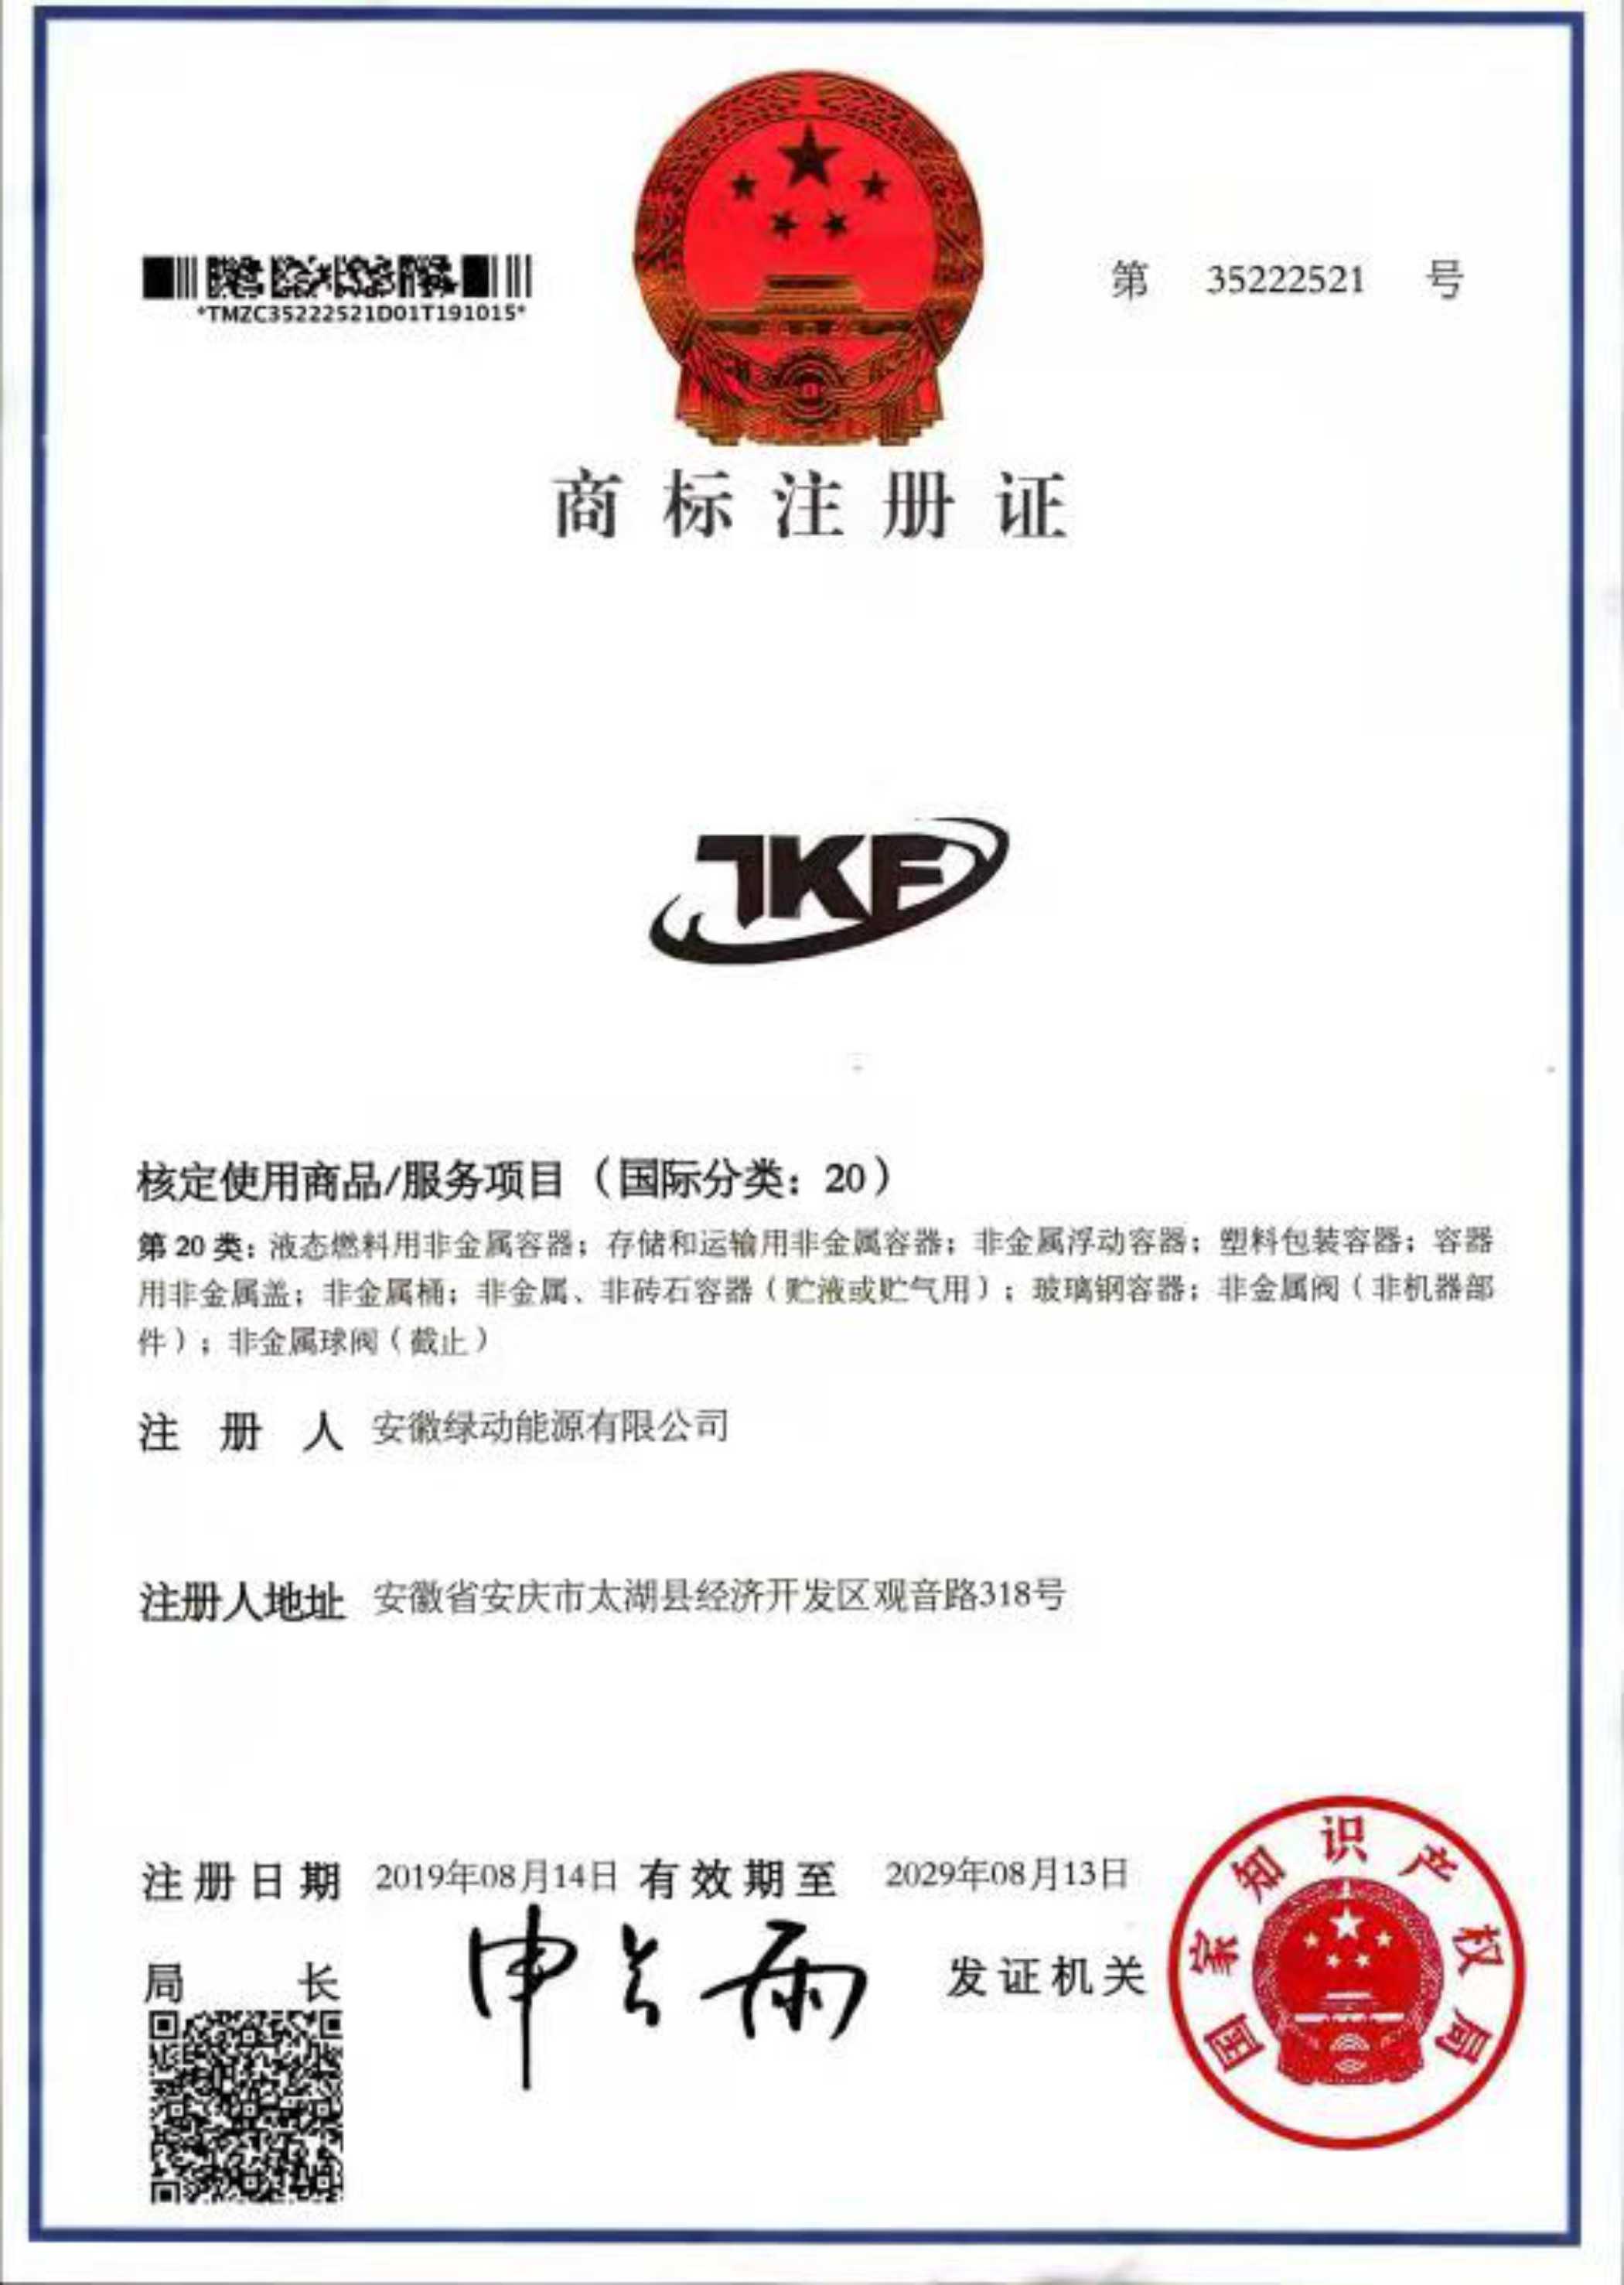 LPG-related certificates